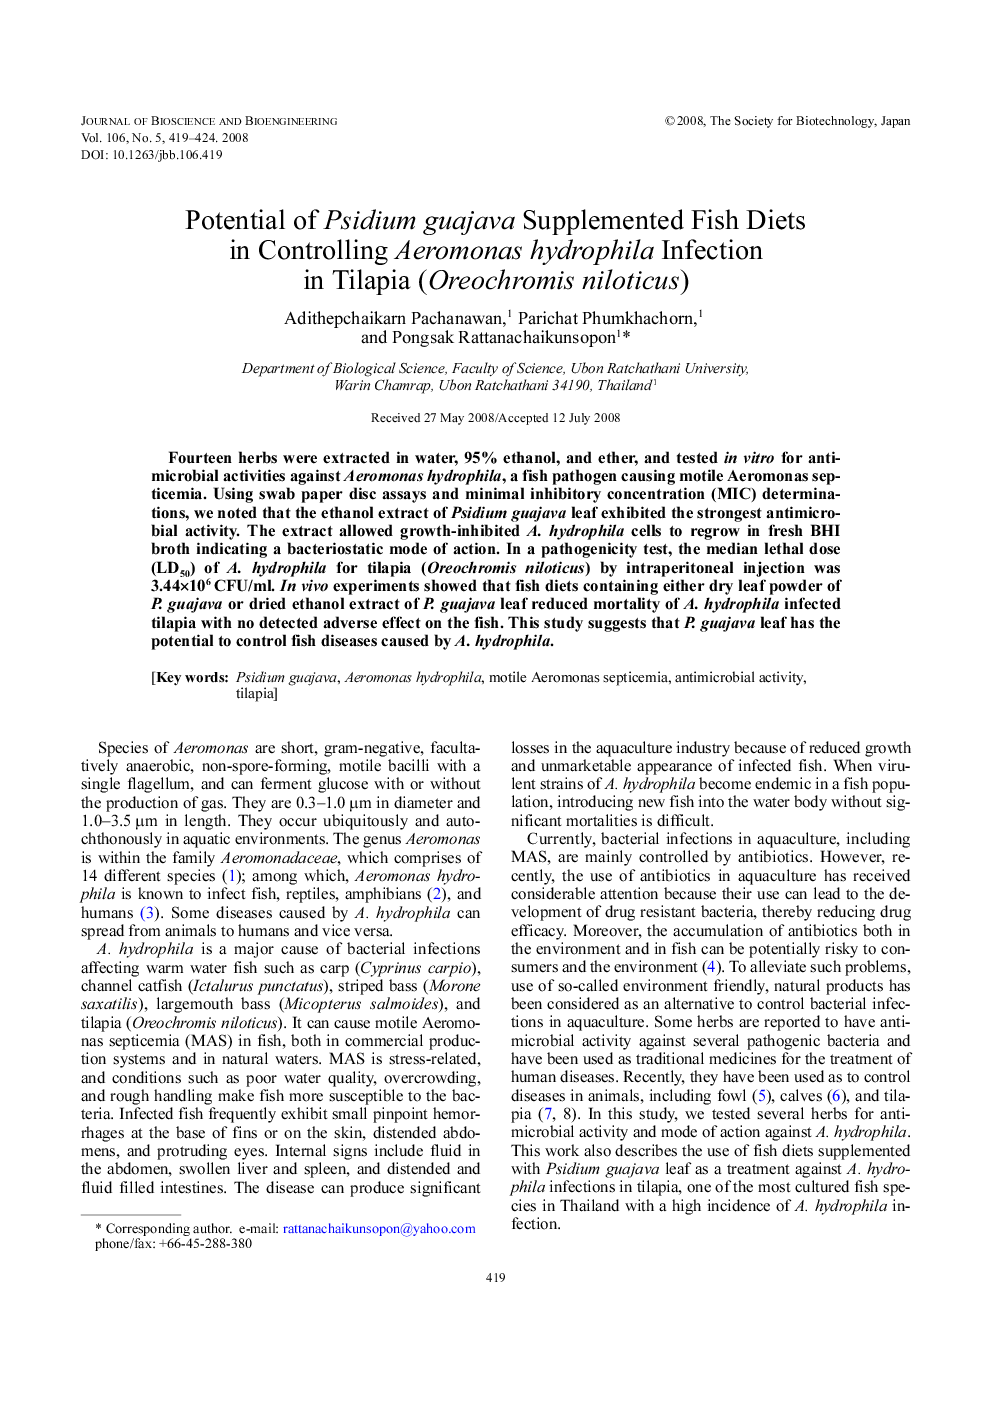 Potential of Psidium guajava Supplemented Fish Diets in Controlling Aeromonas hydrophila Infection in Tilapia (Oreochromis niloticus)